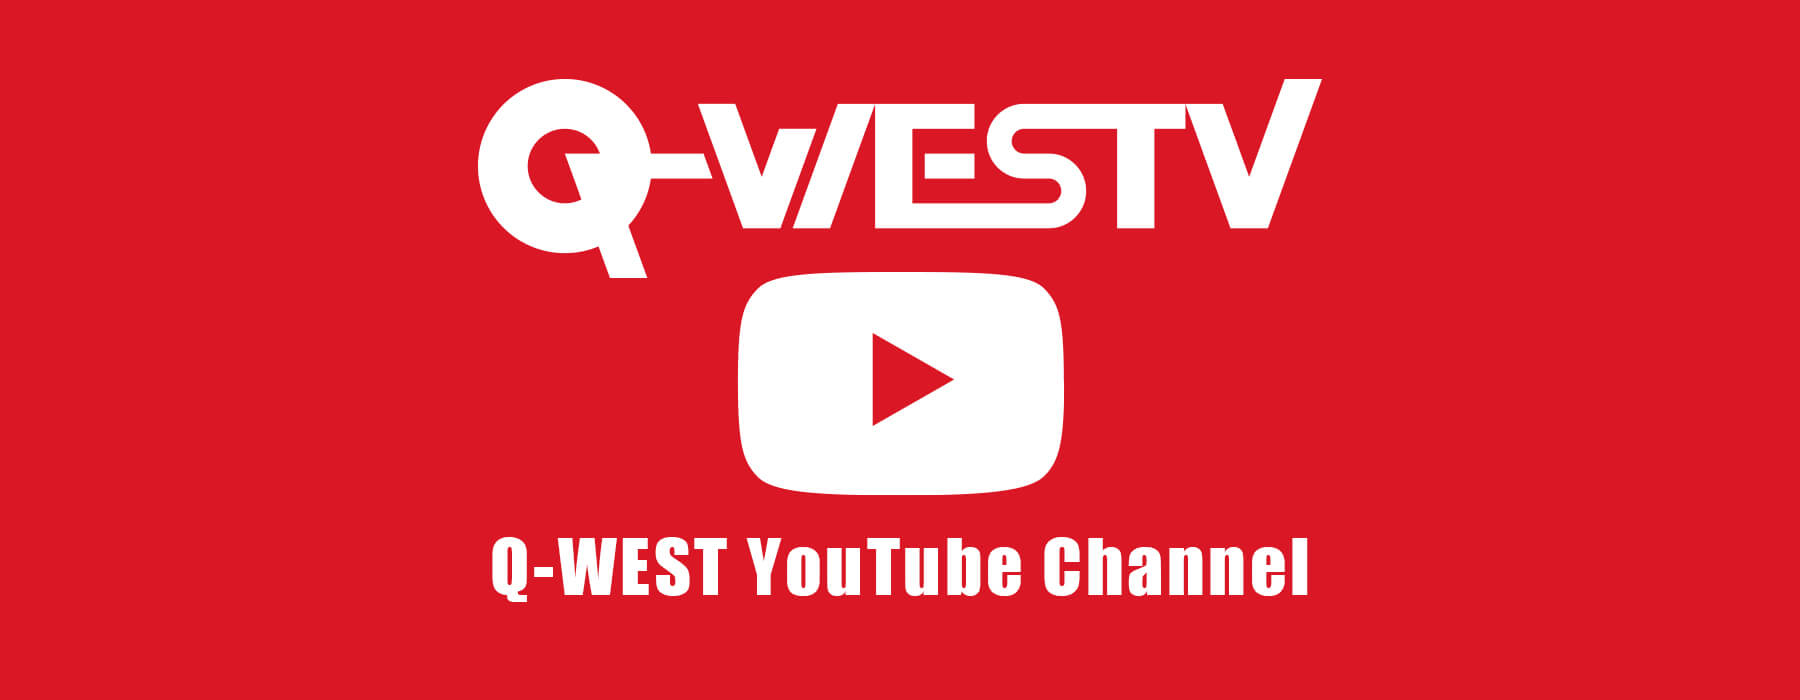 Q-WESTV YouTube Channel